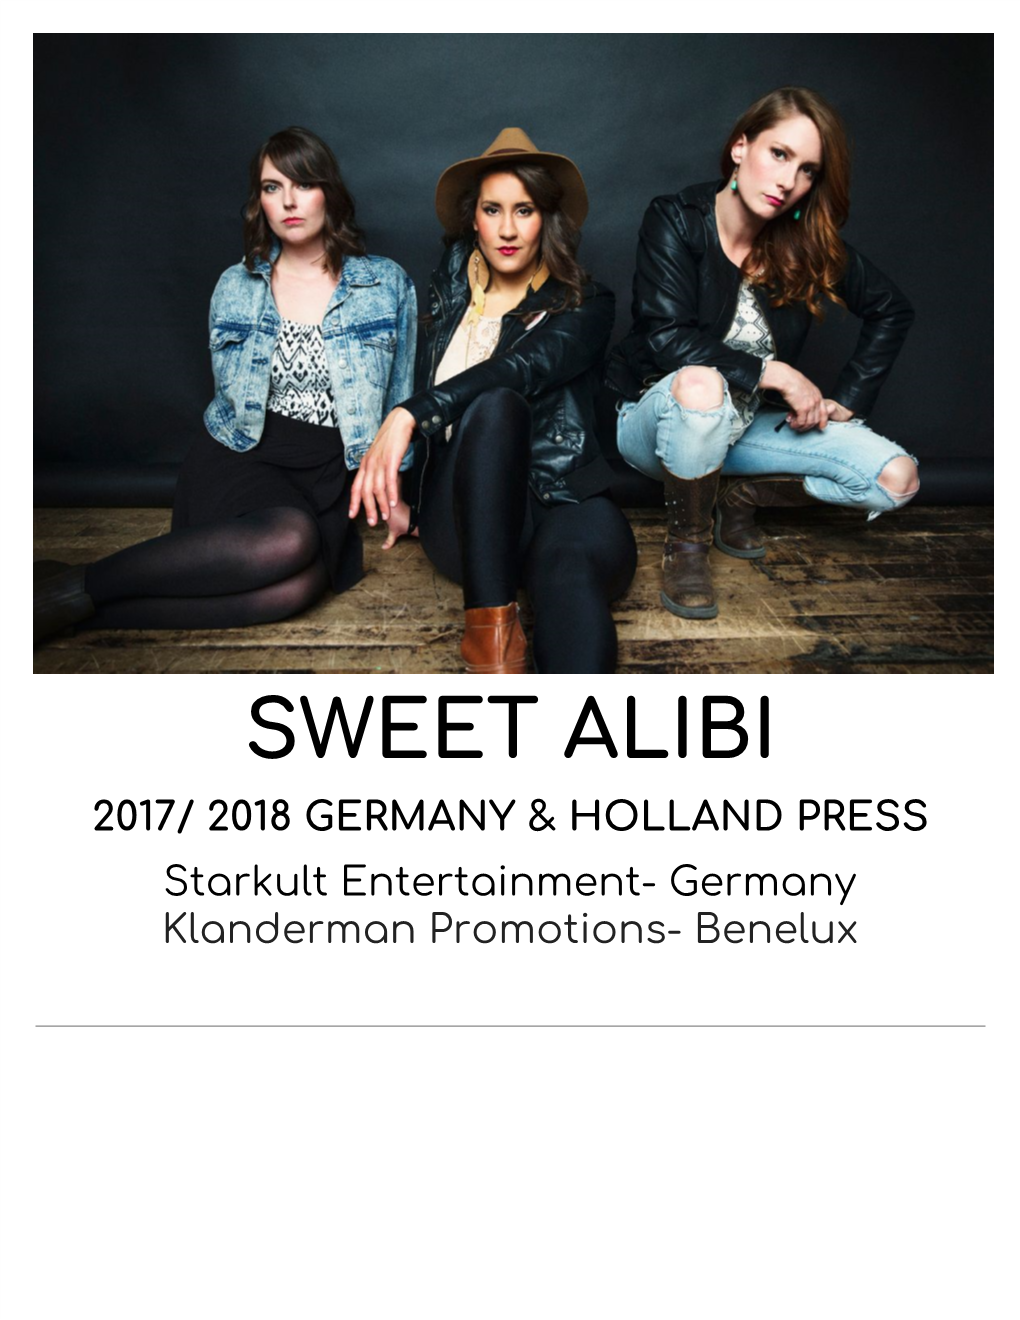 Sweet Alibi 2017/ 2018 Germany & Holland Press